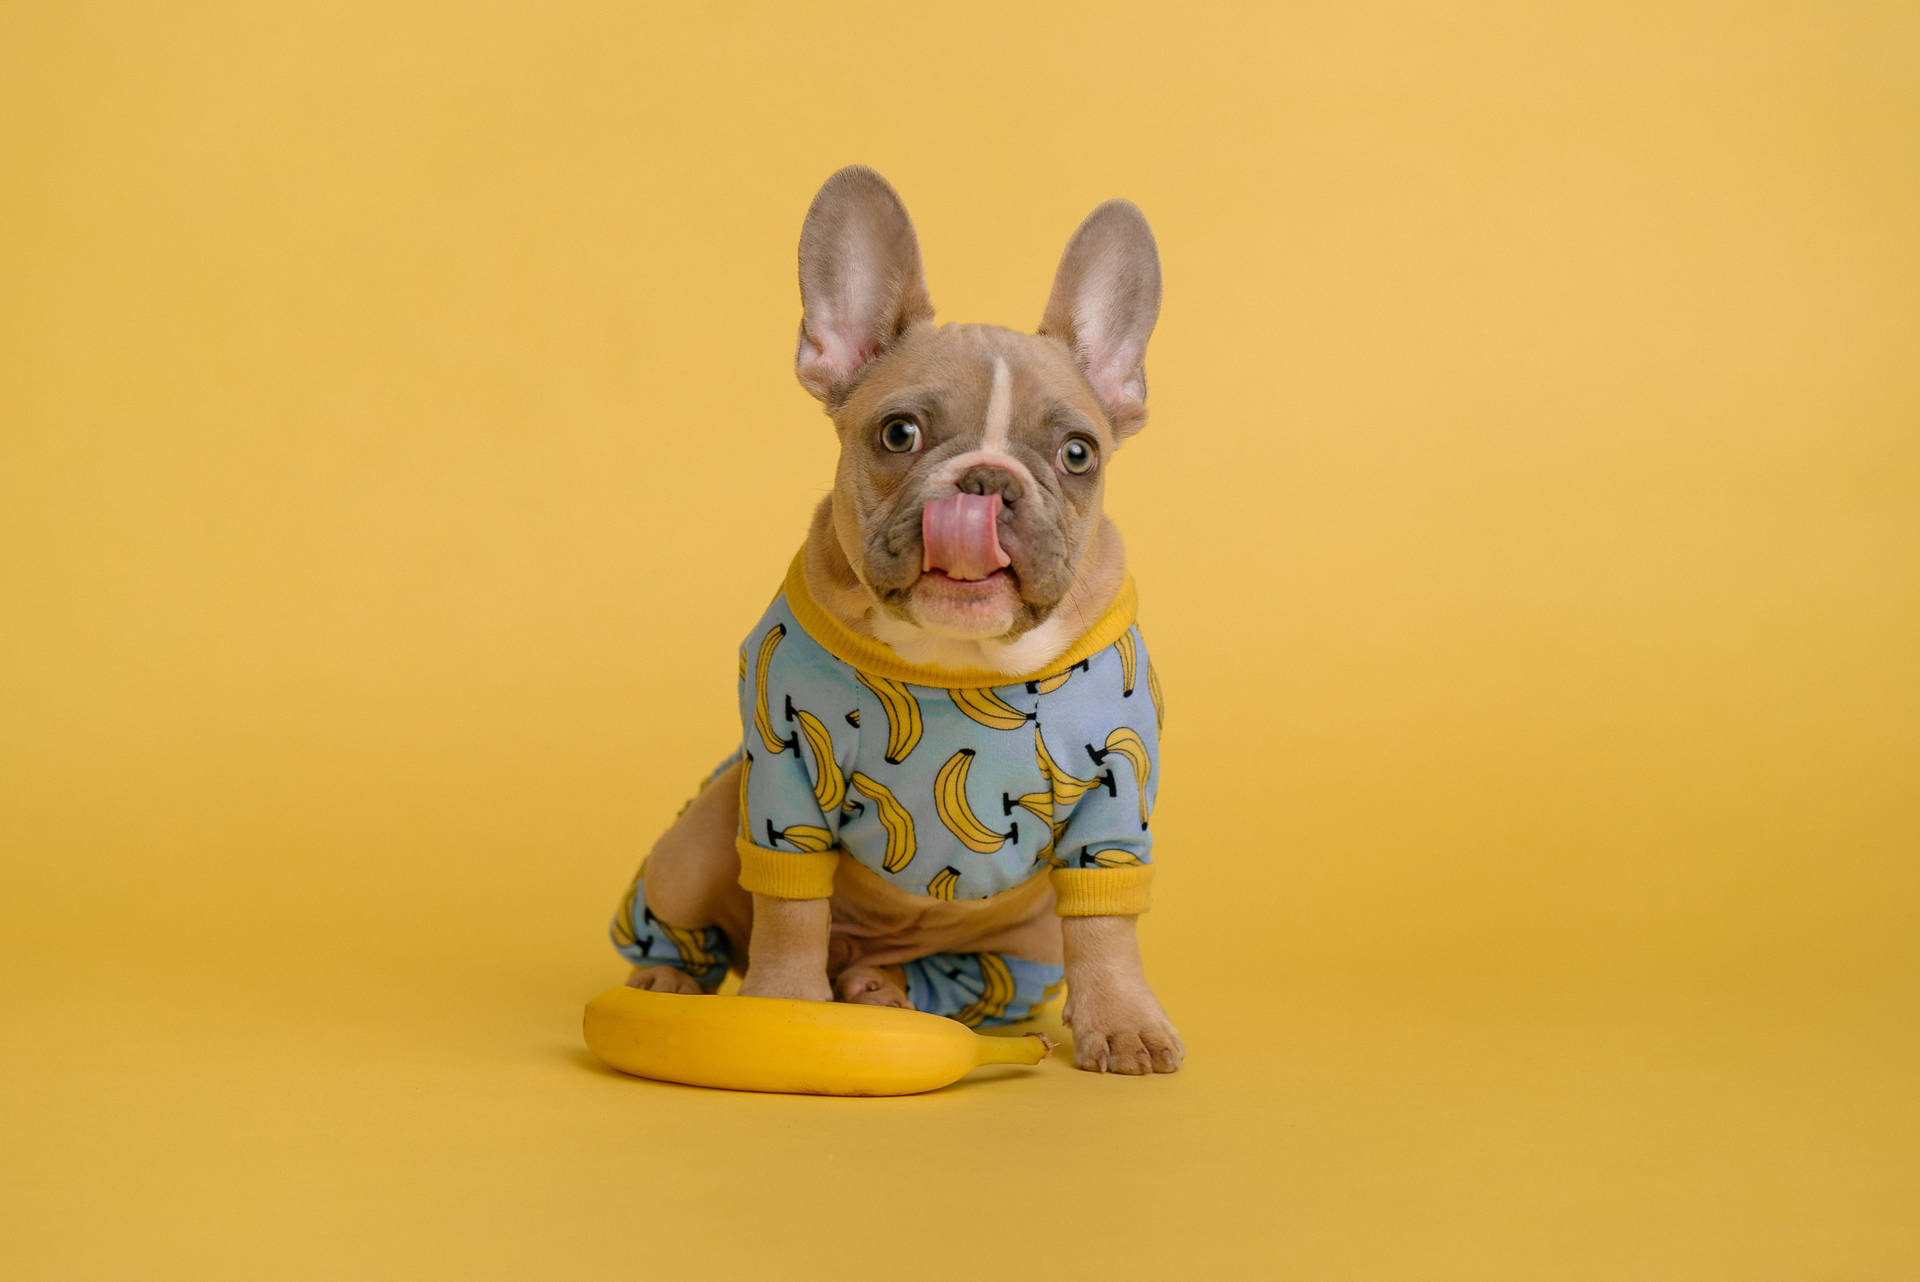 French Bulldog In Banana Outfit Wallpaper